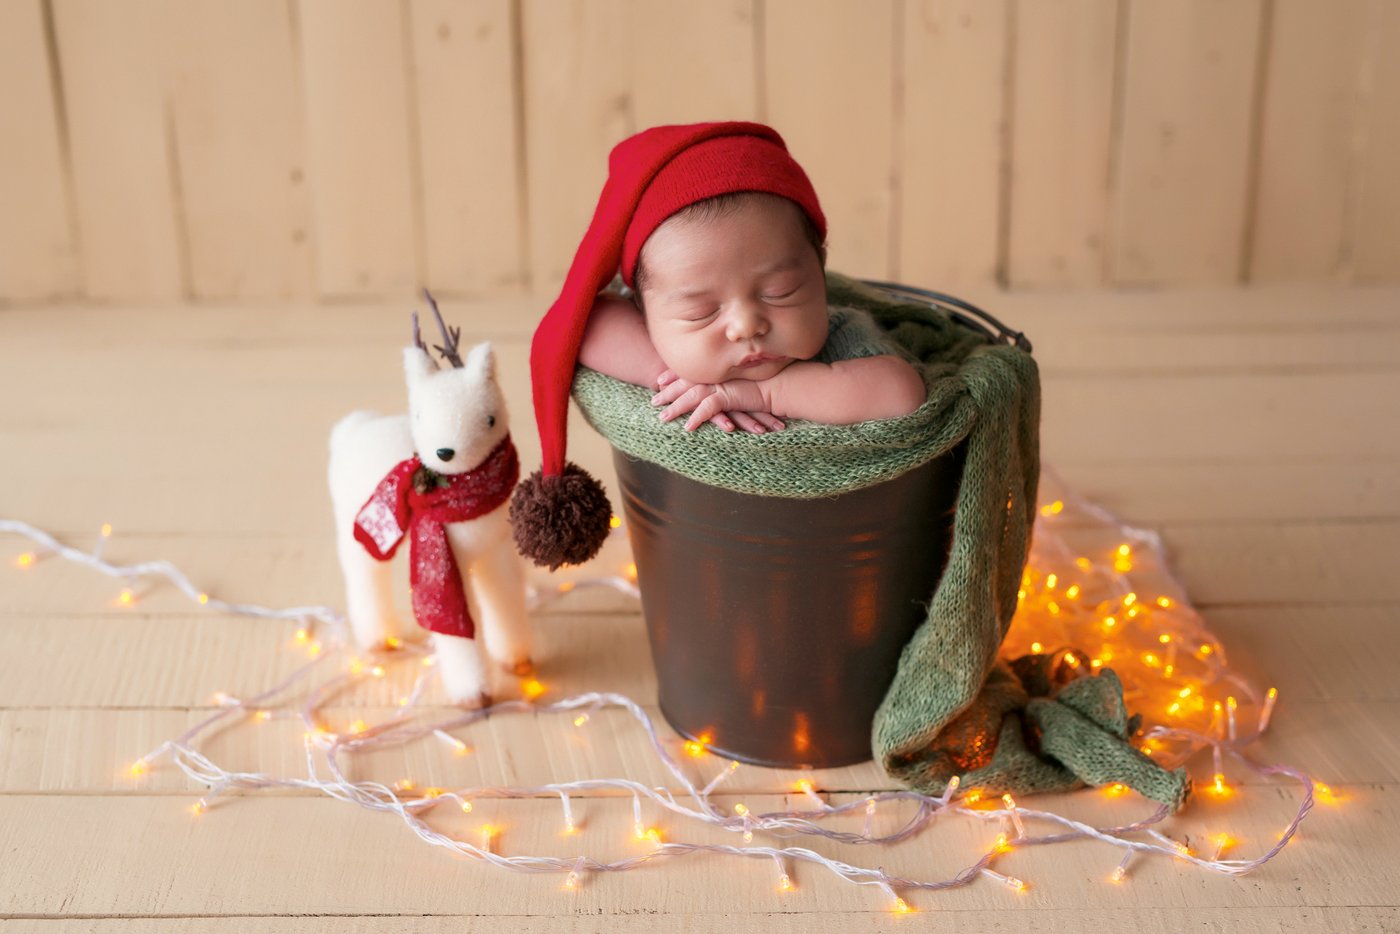 Sleeping newborn baby at Christmas